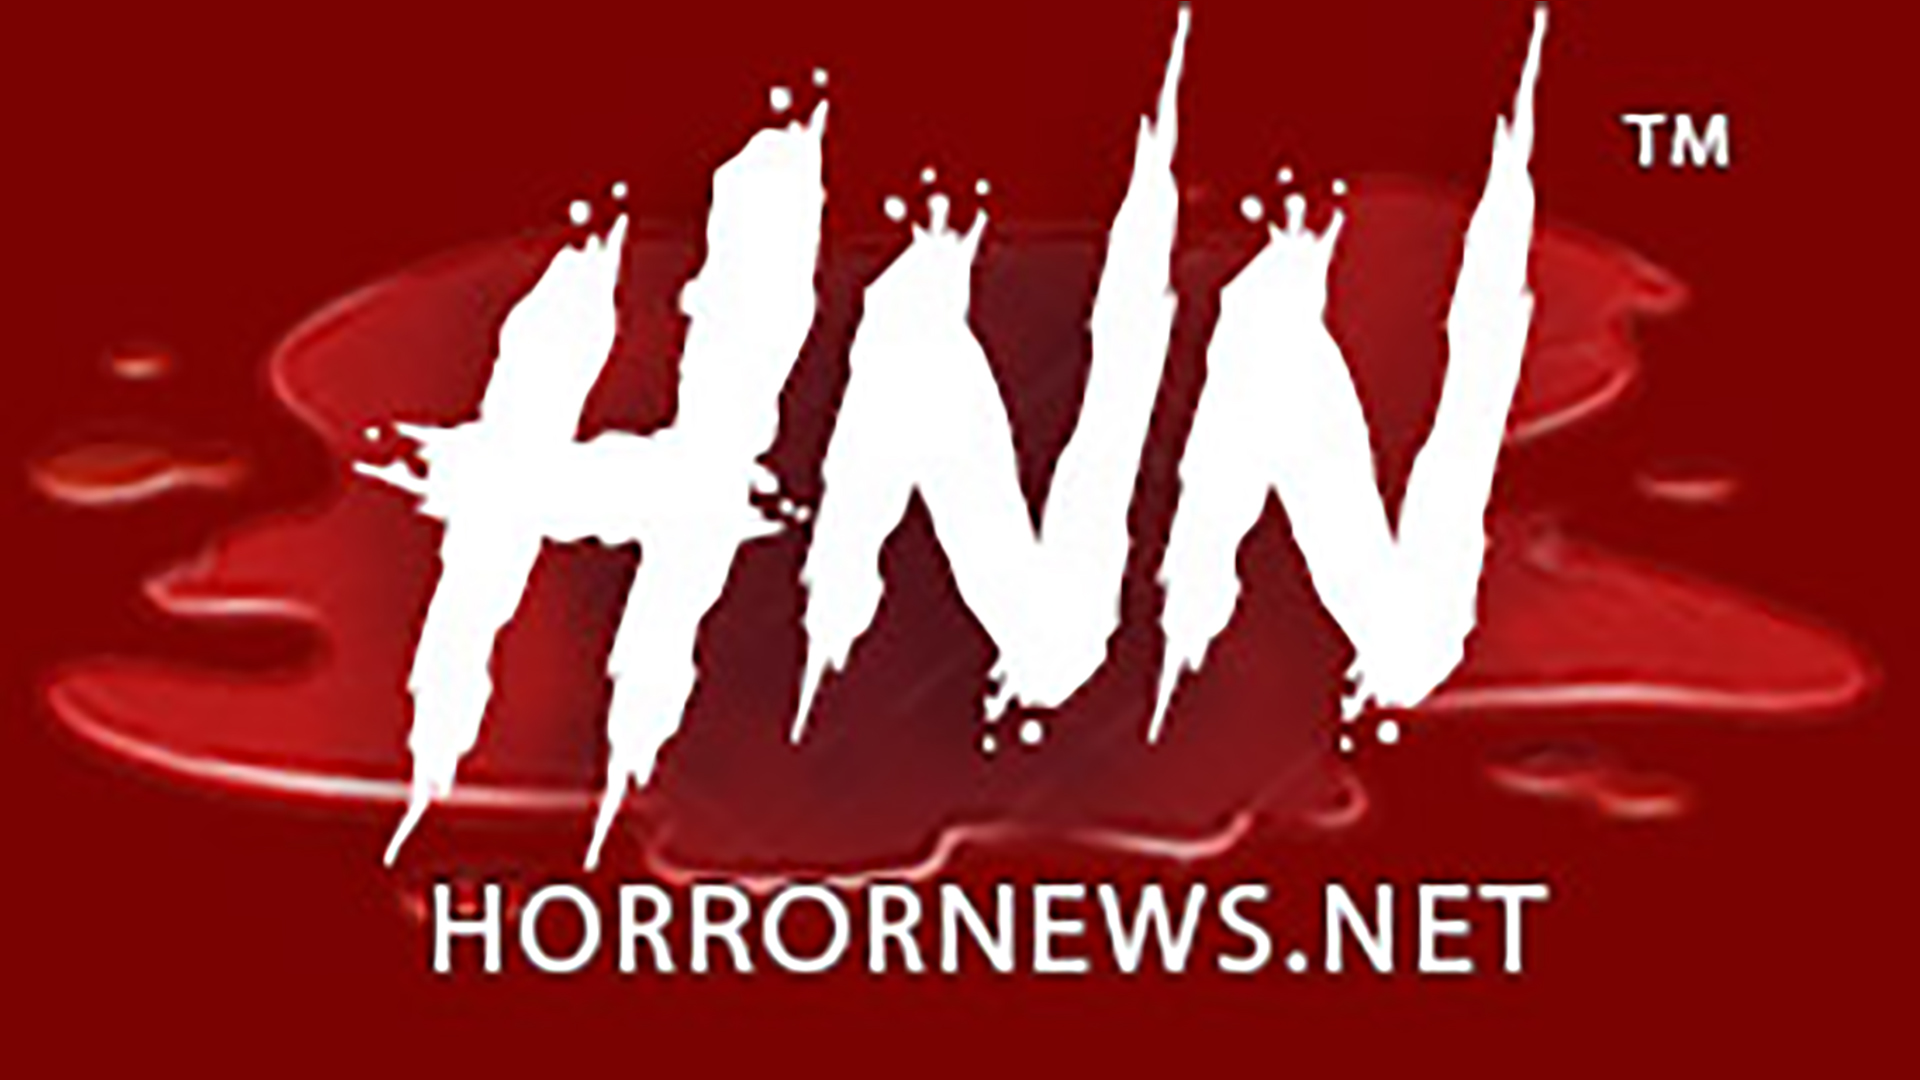 Horrornews.net Review of "Sadist"